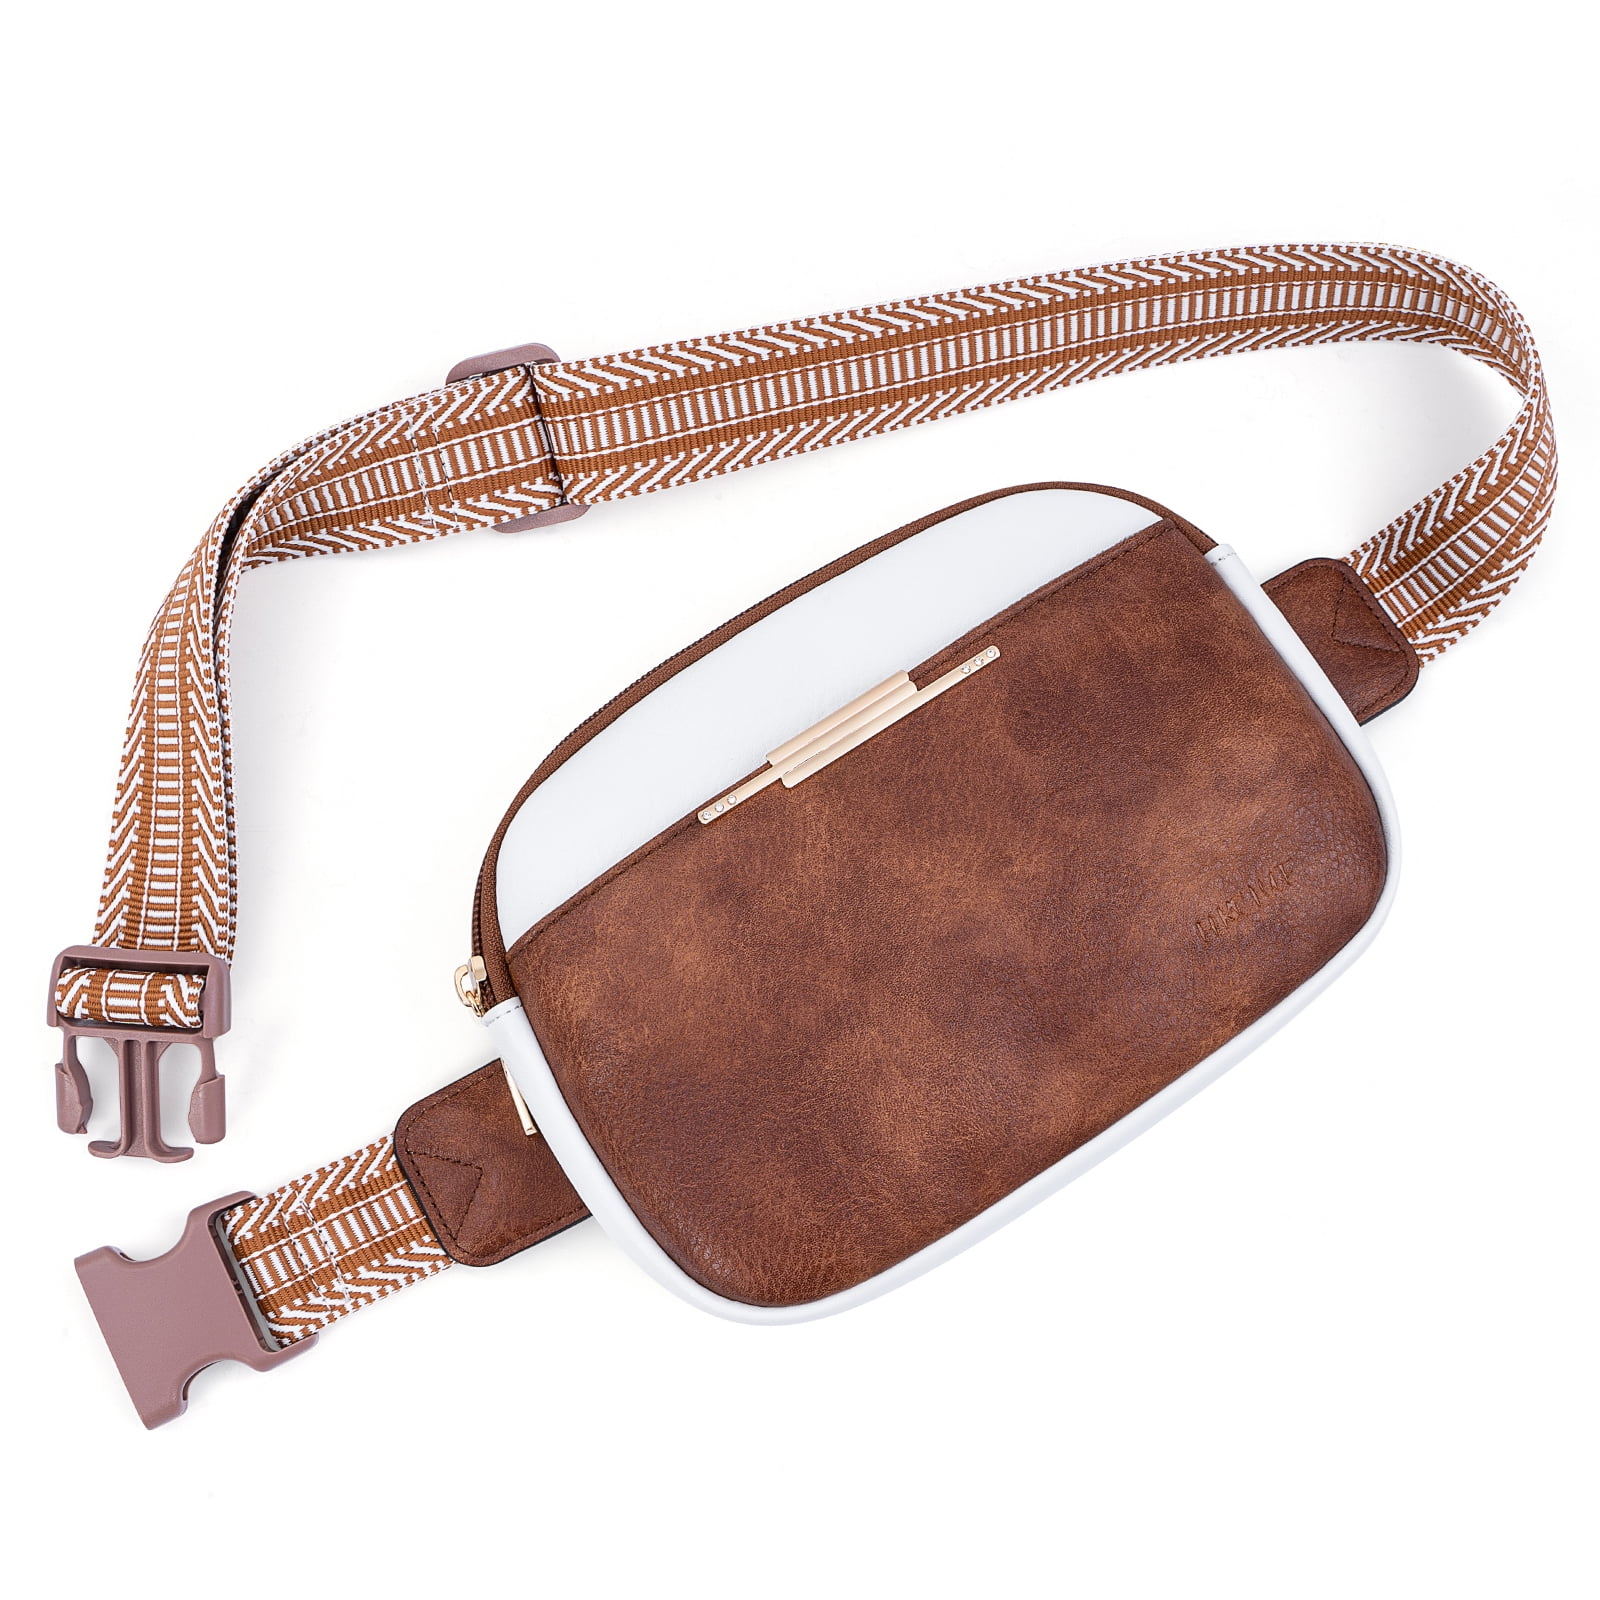 HKCLUF Belt Bag for Women Vegan Leather Mini Belt Bag With Adjustable Strap Unisex Triple Zip Small Cross Body Fanny Pack bdd00eec 5665 441b a362 12e8ab2c9b24.f584c208981e82383b09d9b9b5bde5a1